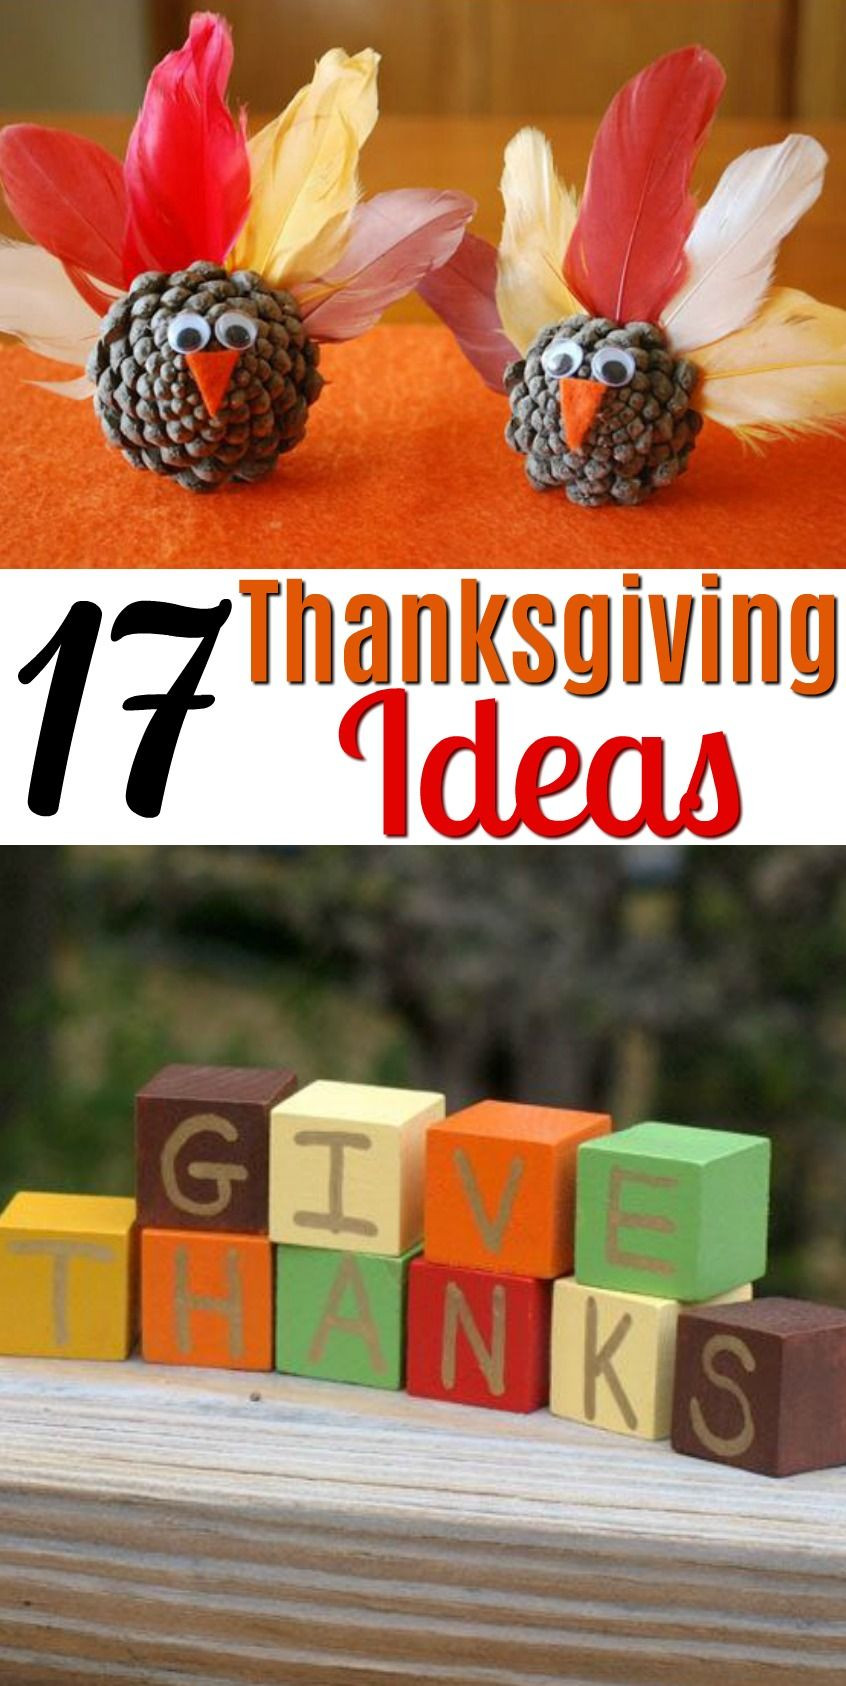 Thanksgiving Crafts For Teens
 17 Thanksgiving DIY Ideas